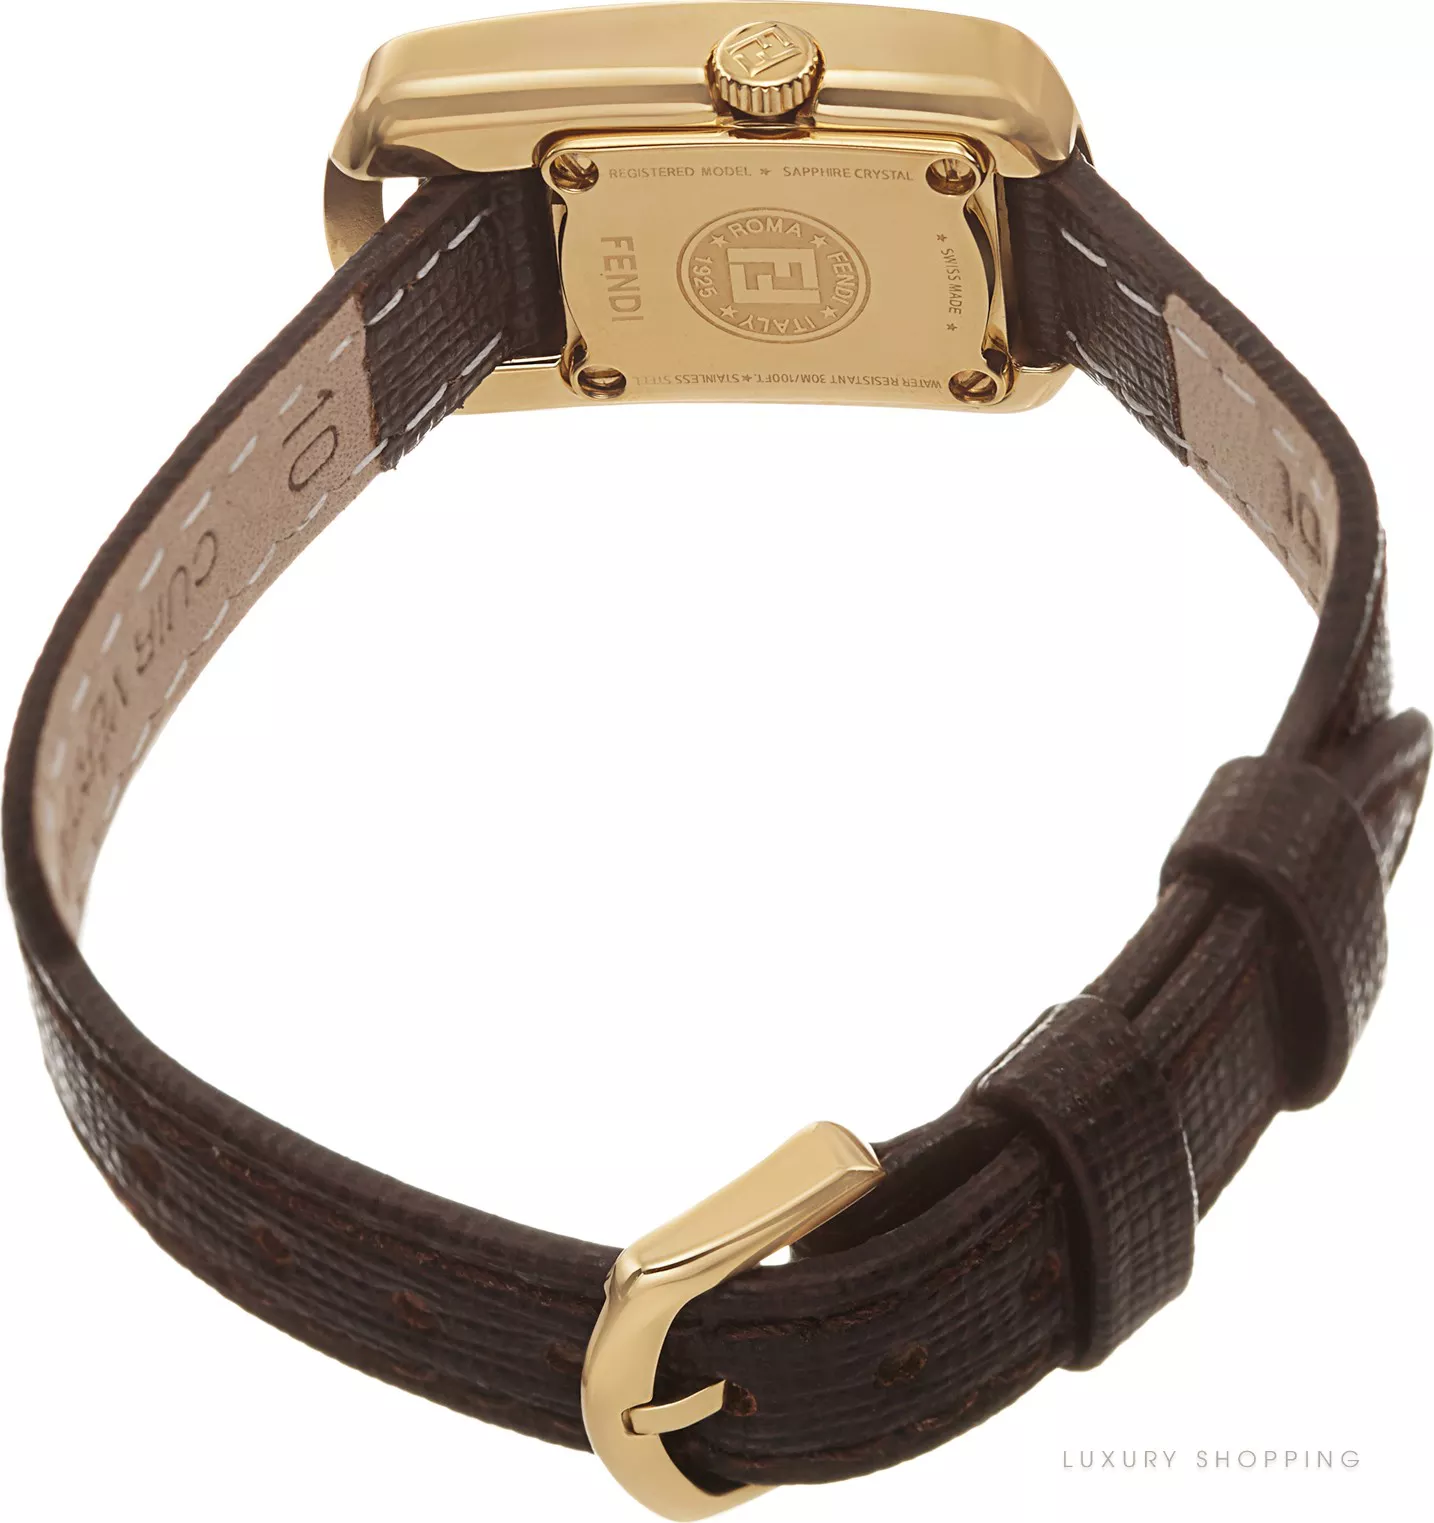 Fendi Chameleon Watch F312425021D1